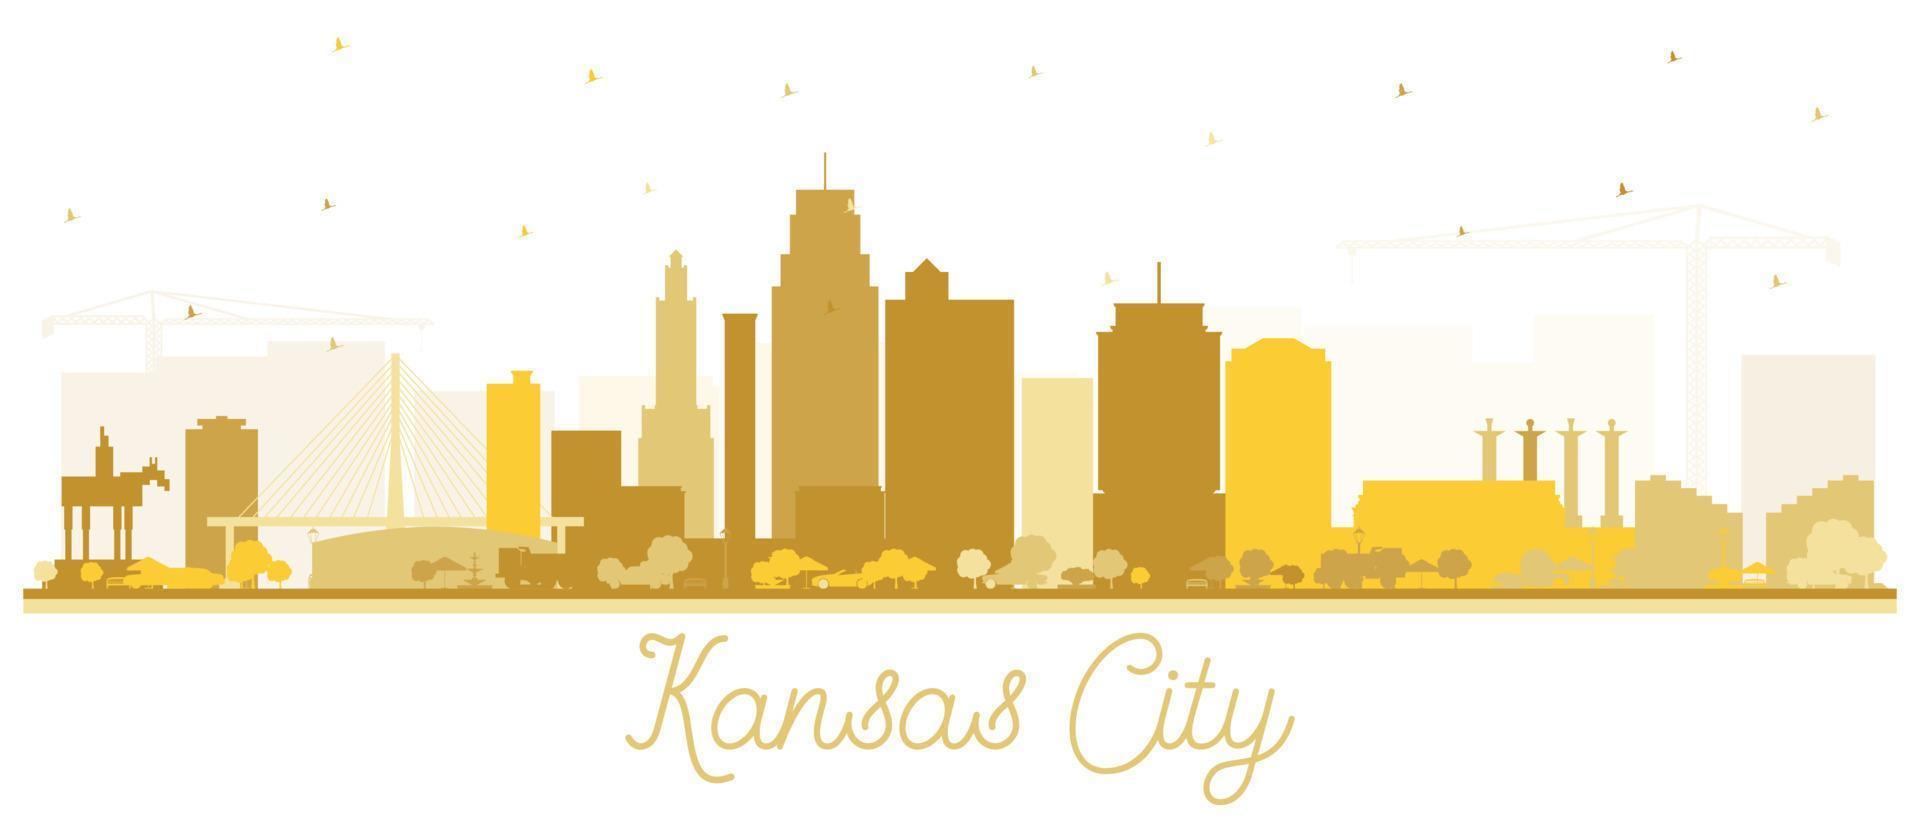 Kansas City Missouri Skyline Silhouette with Golden Buildings Isolated on White. vector